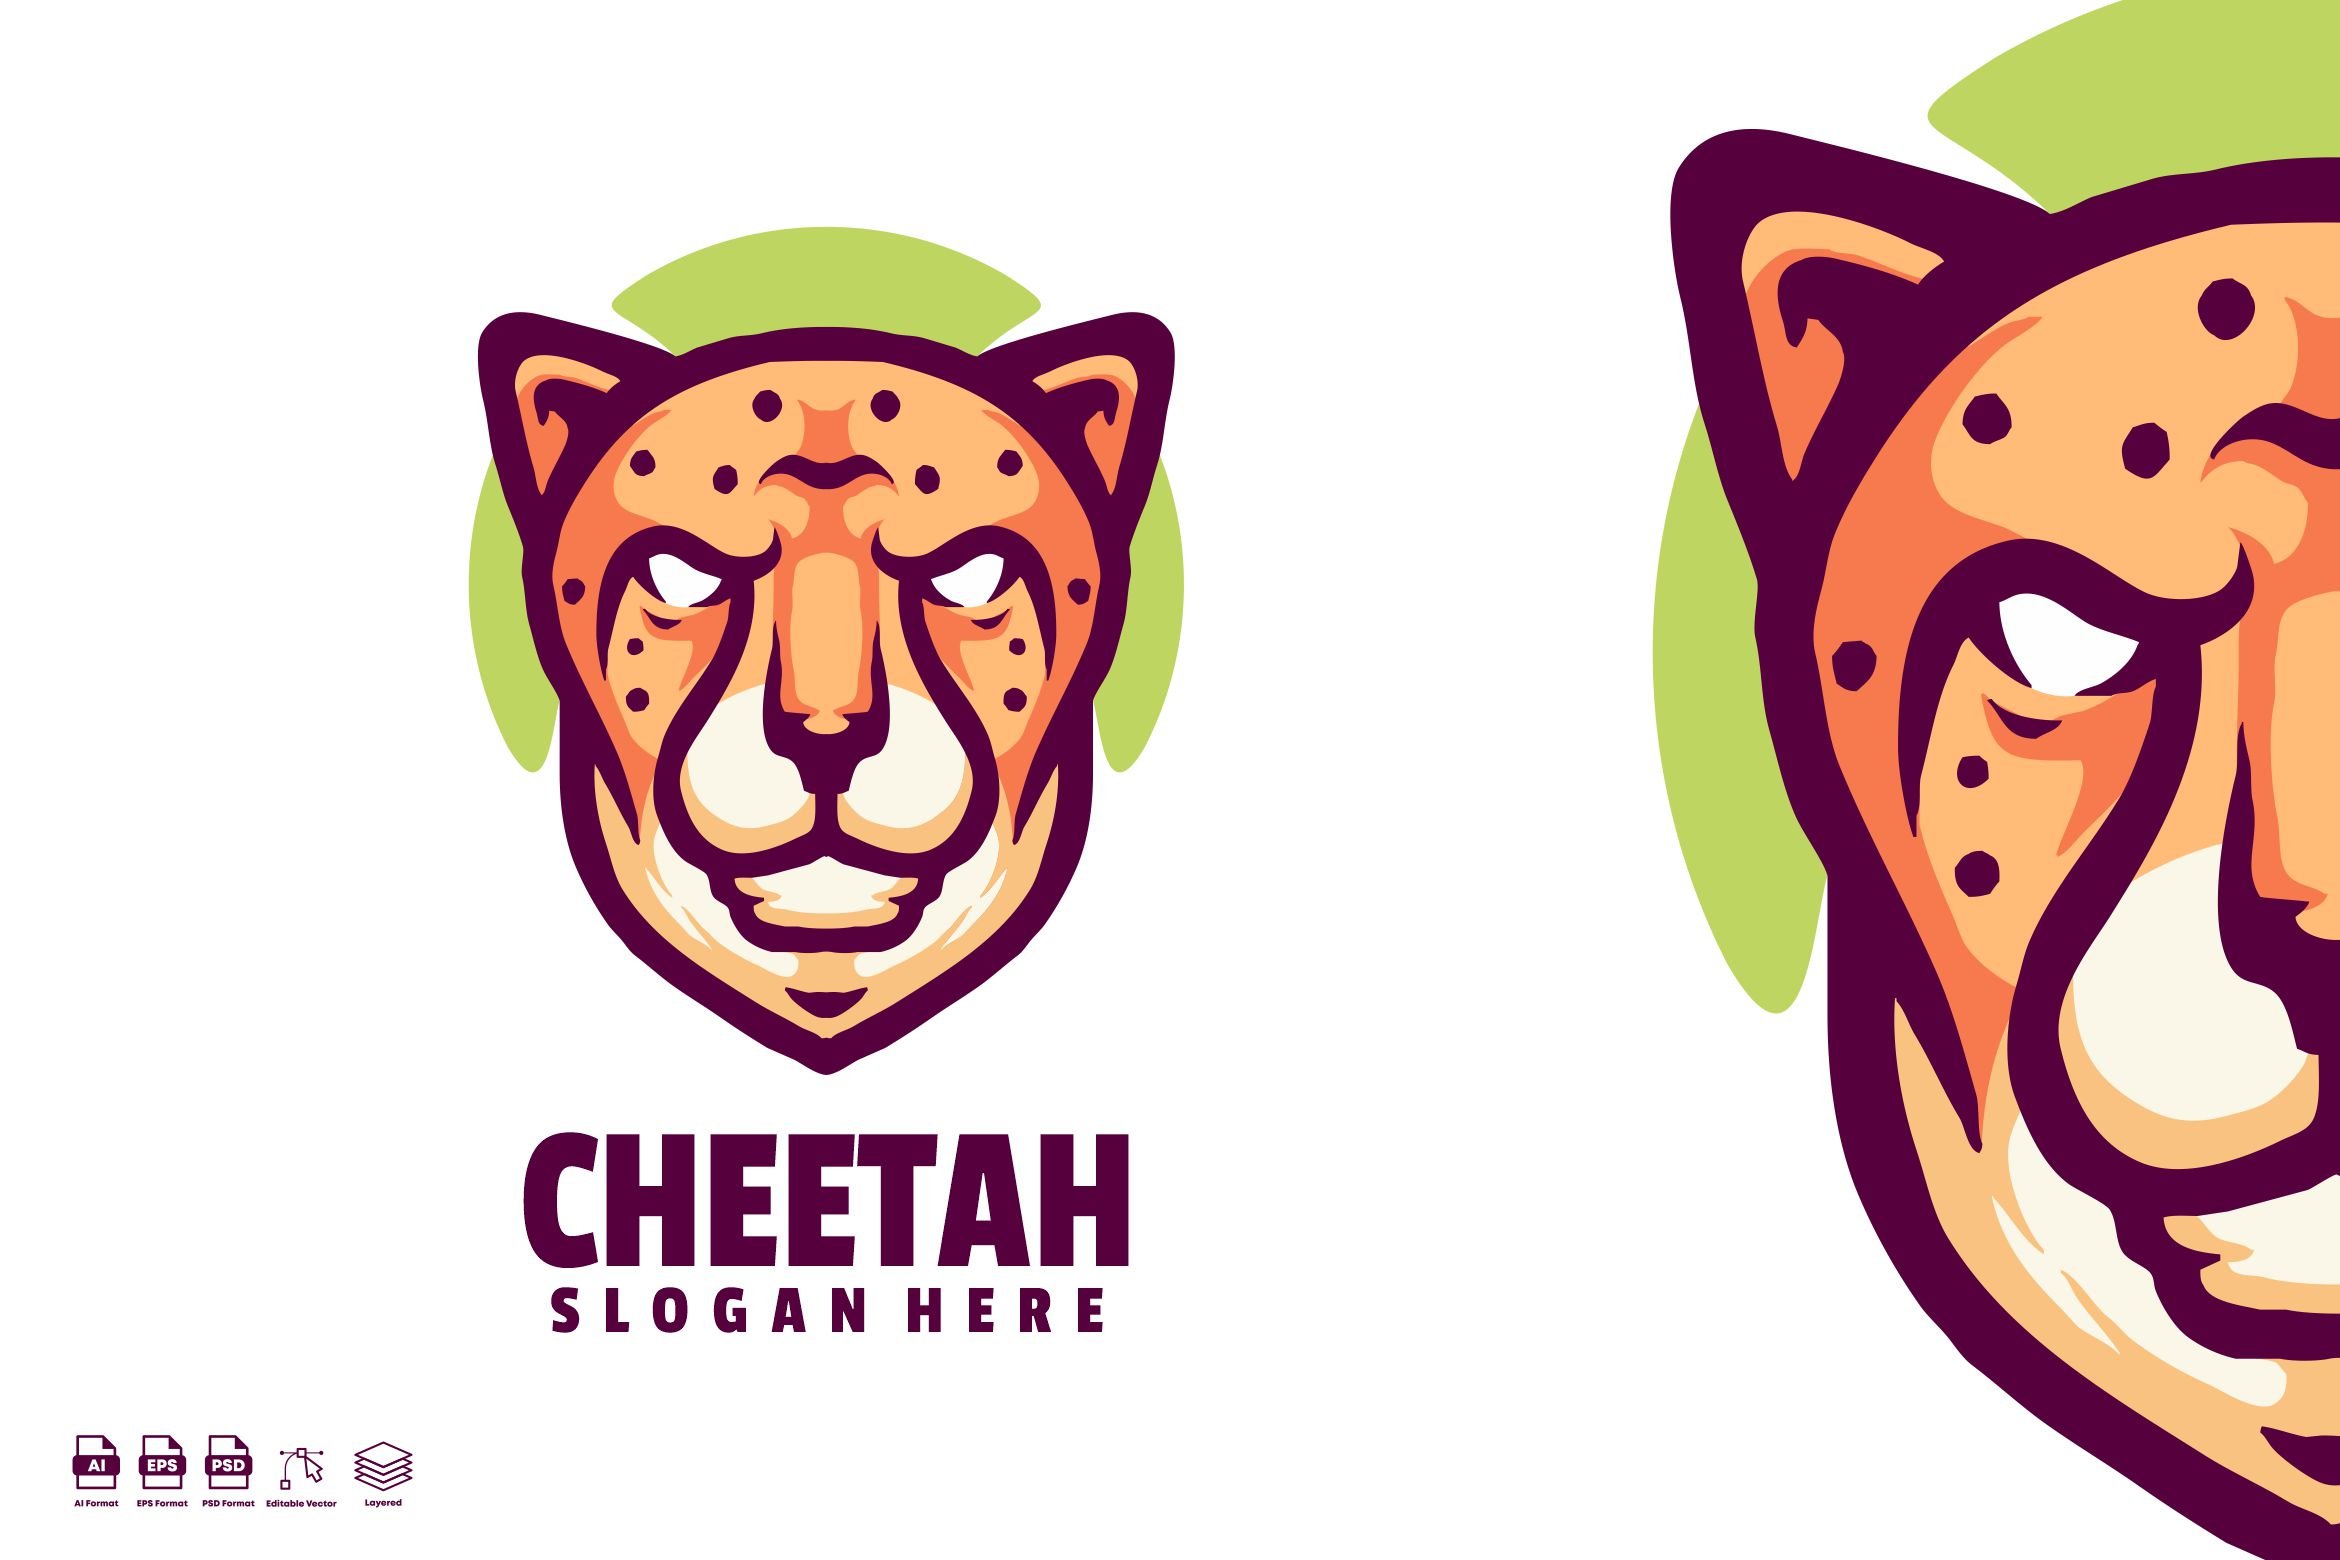 Cheetah Mascot logo Design cover image.